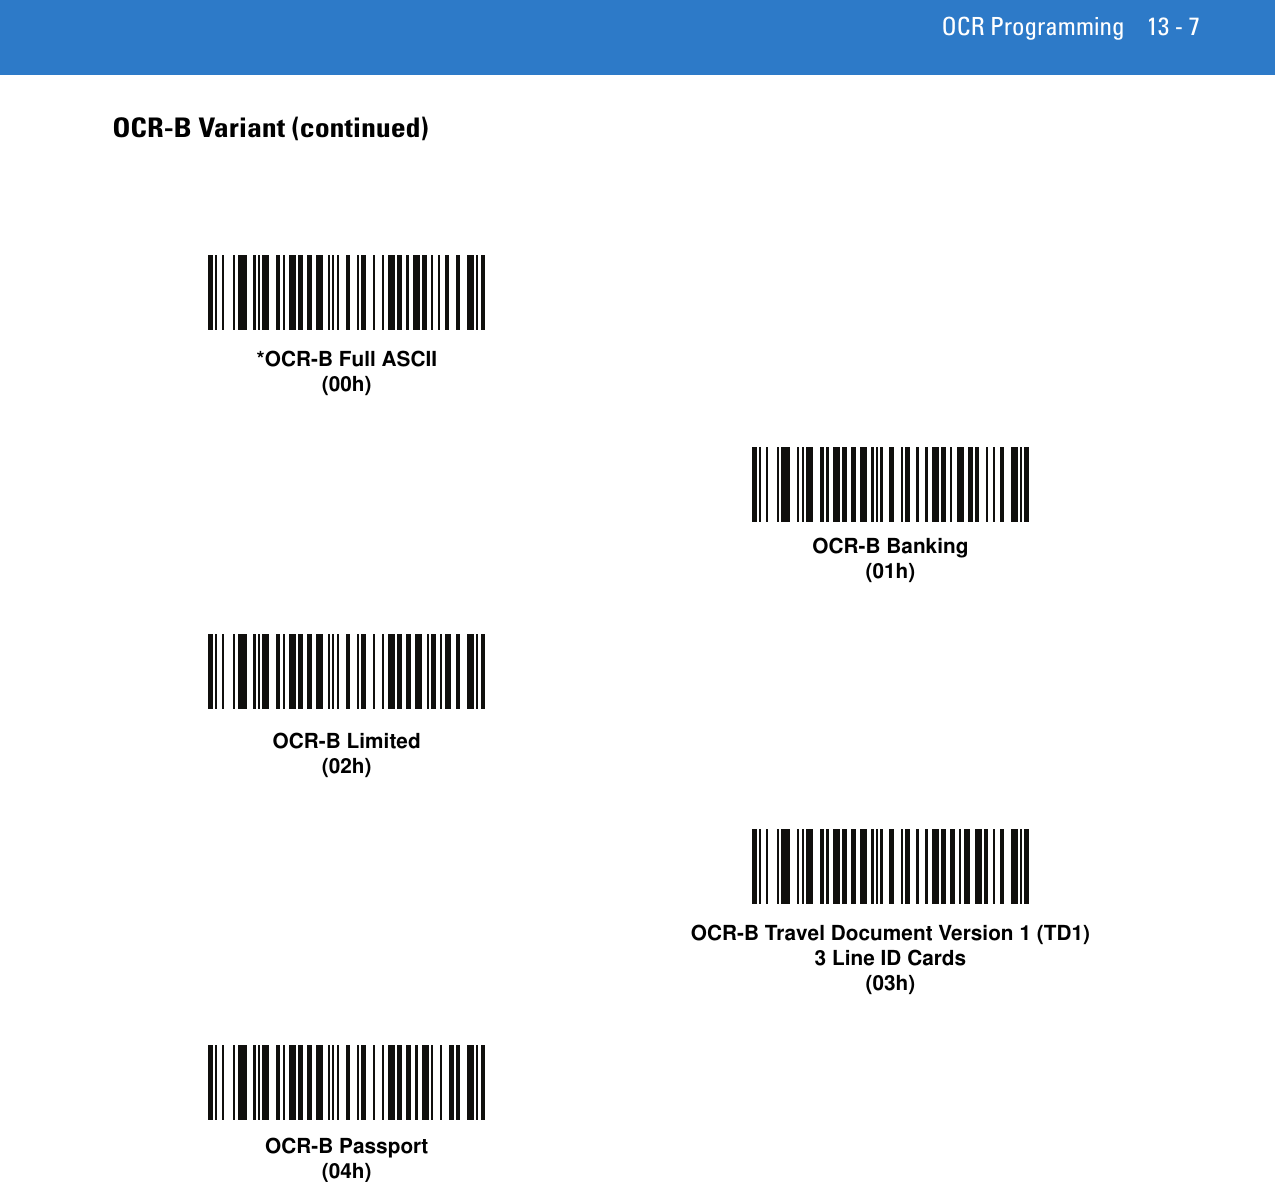 symbol technologies barcode scanner user manual